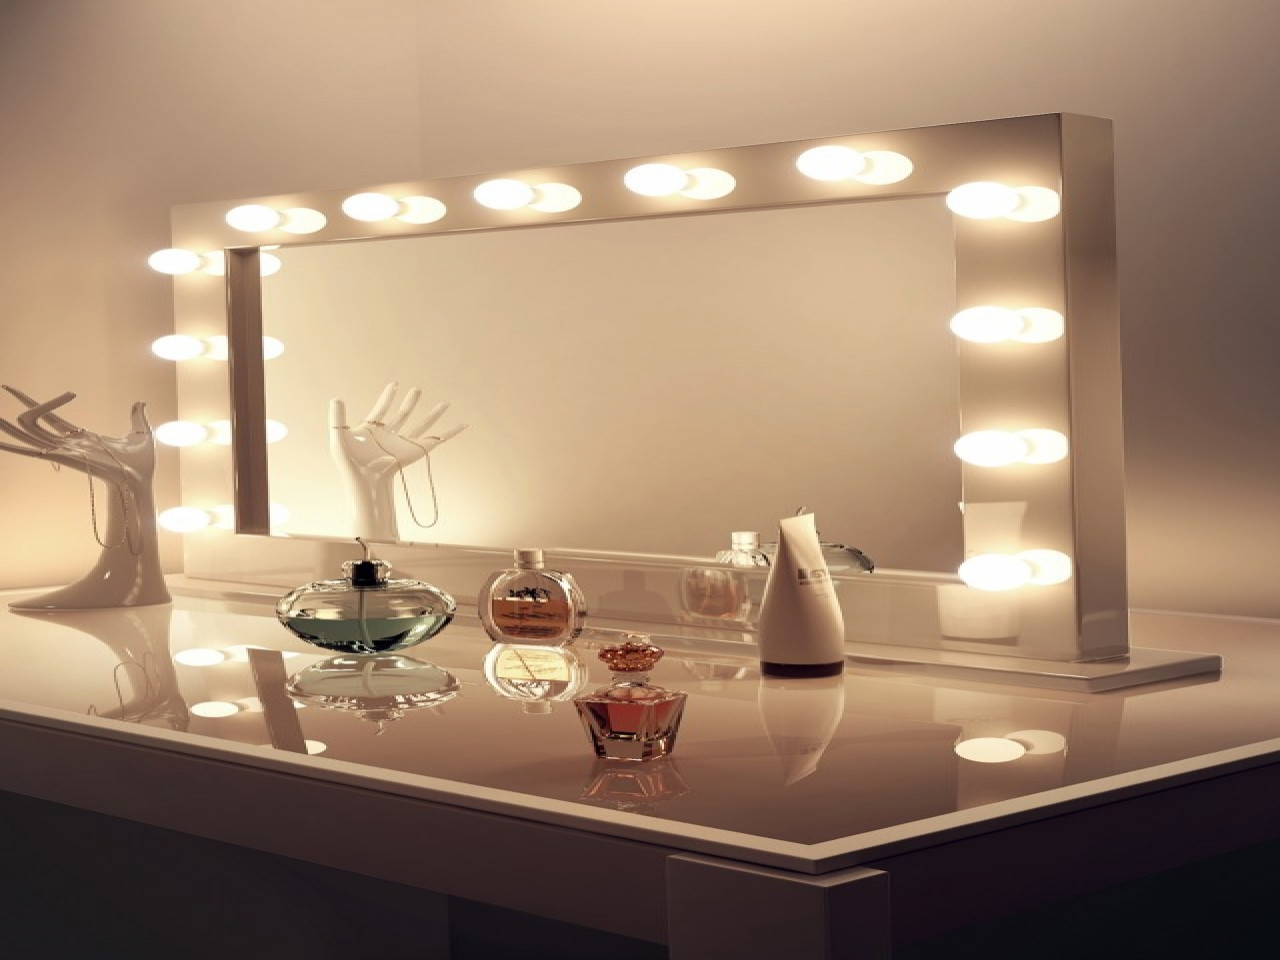 Vanity Girl Hollywood Mirror DIY
 Dressing table with hollywood lights vanity girl